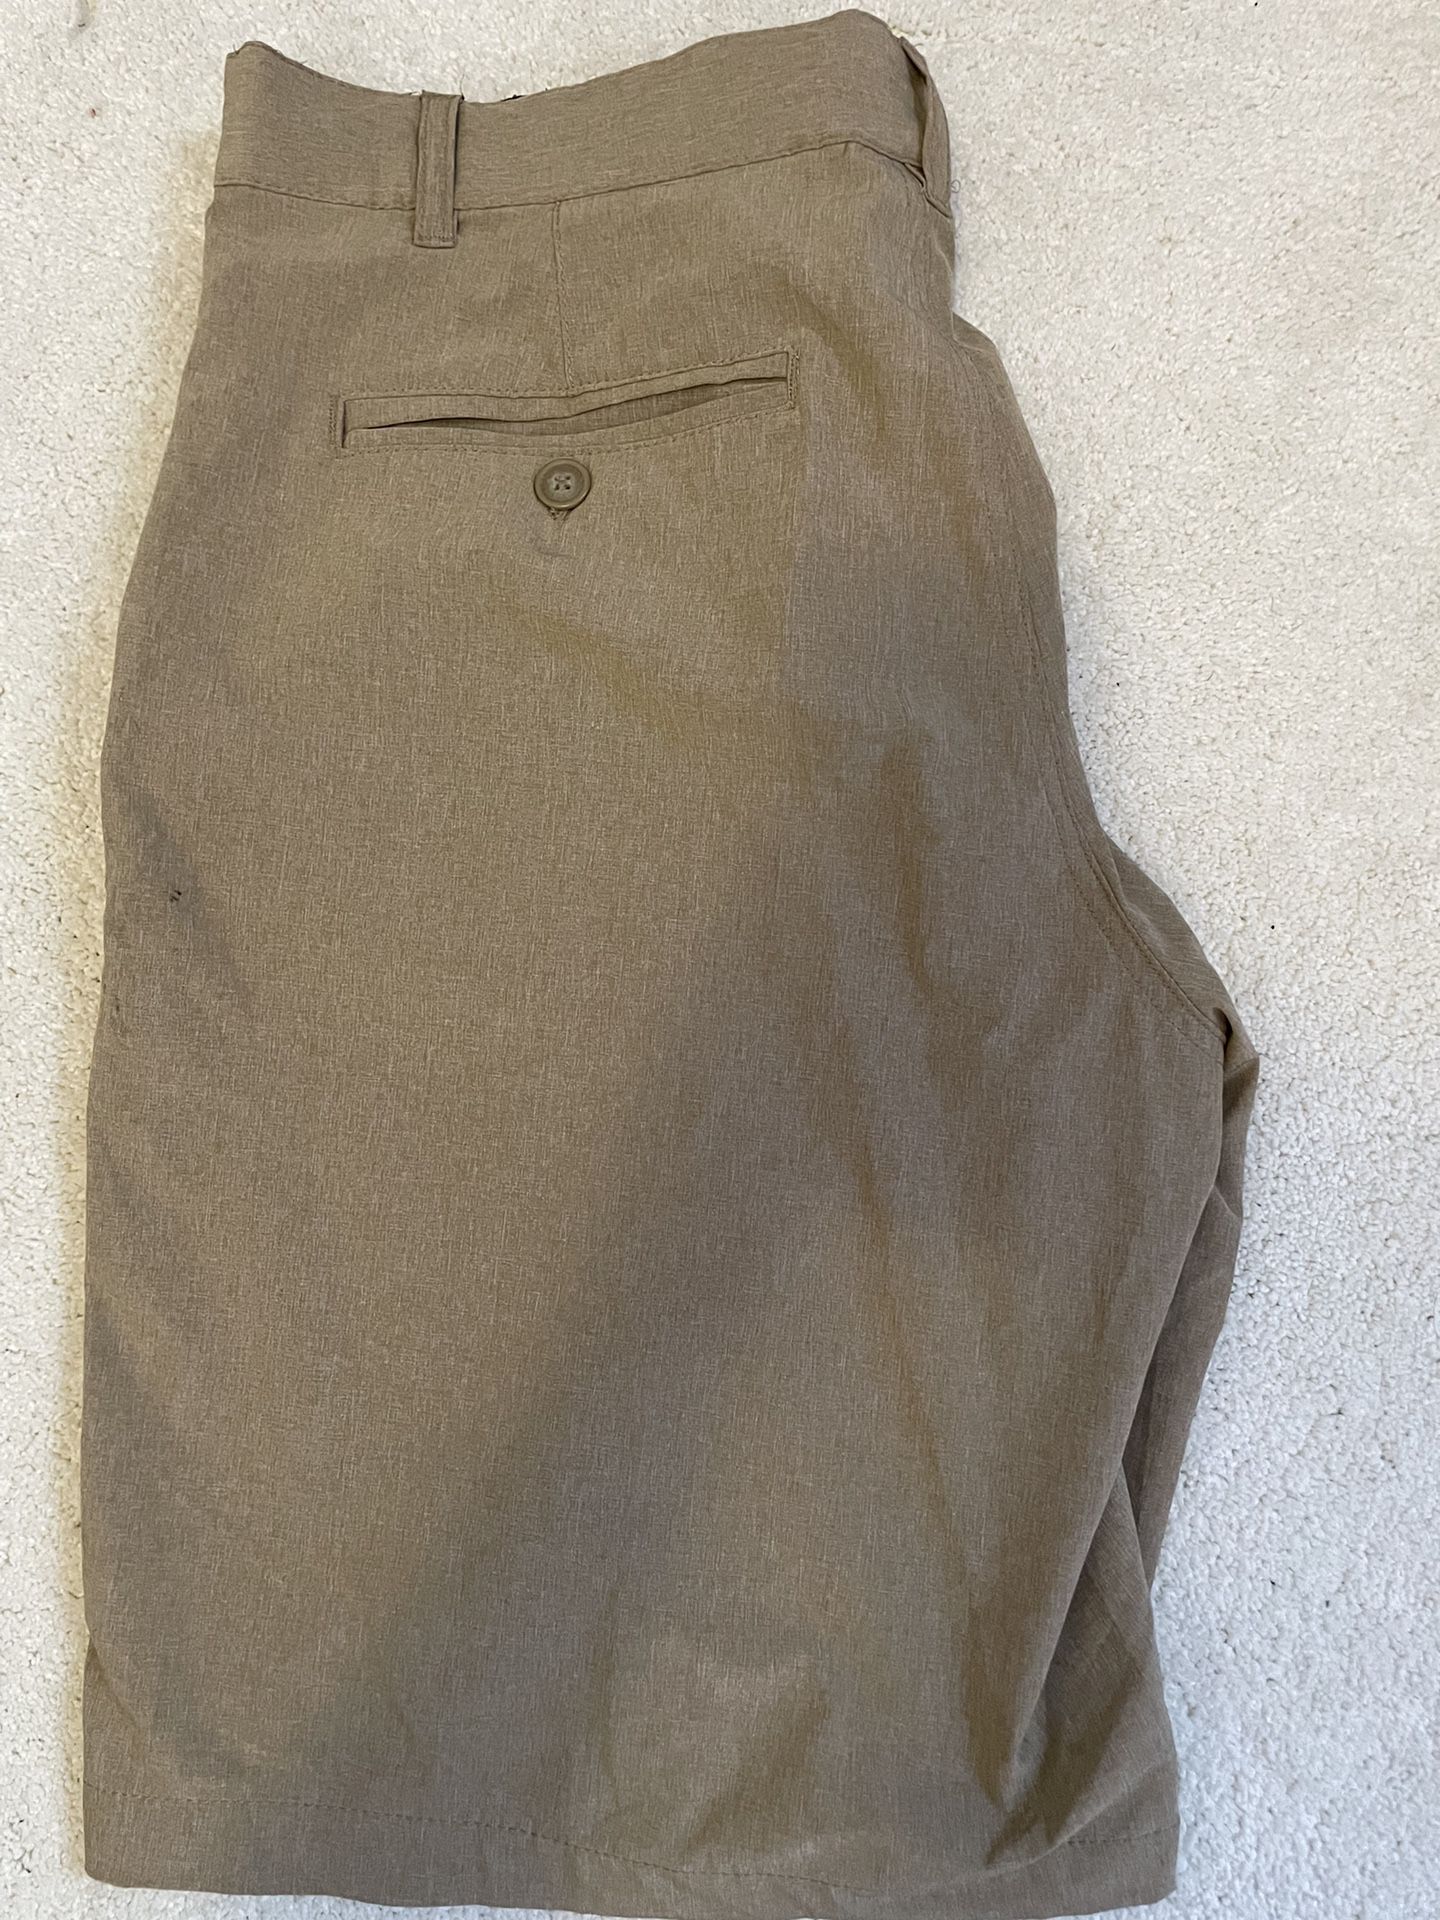 Waterproof Khaki Golf Shorts- 36 Waist